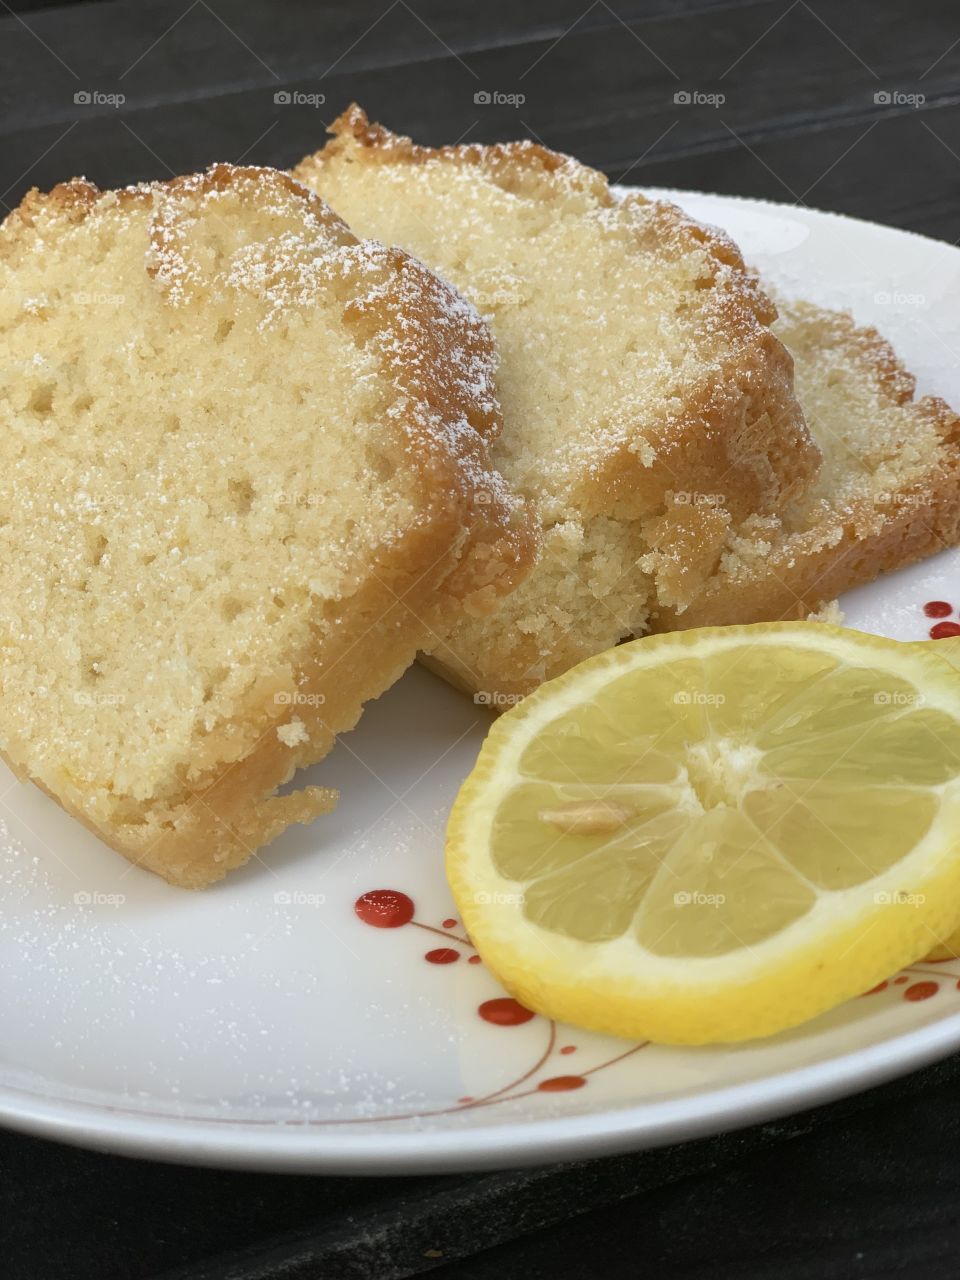 Lemon pound cake slices